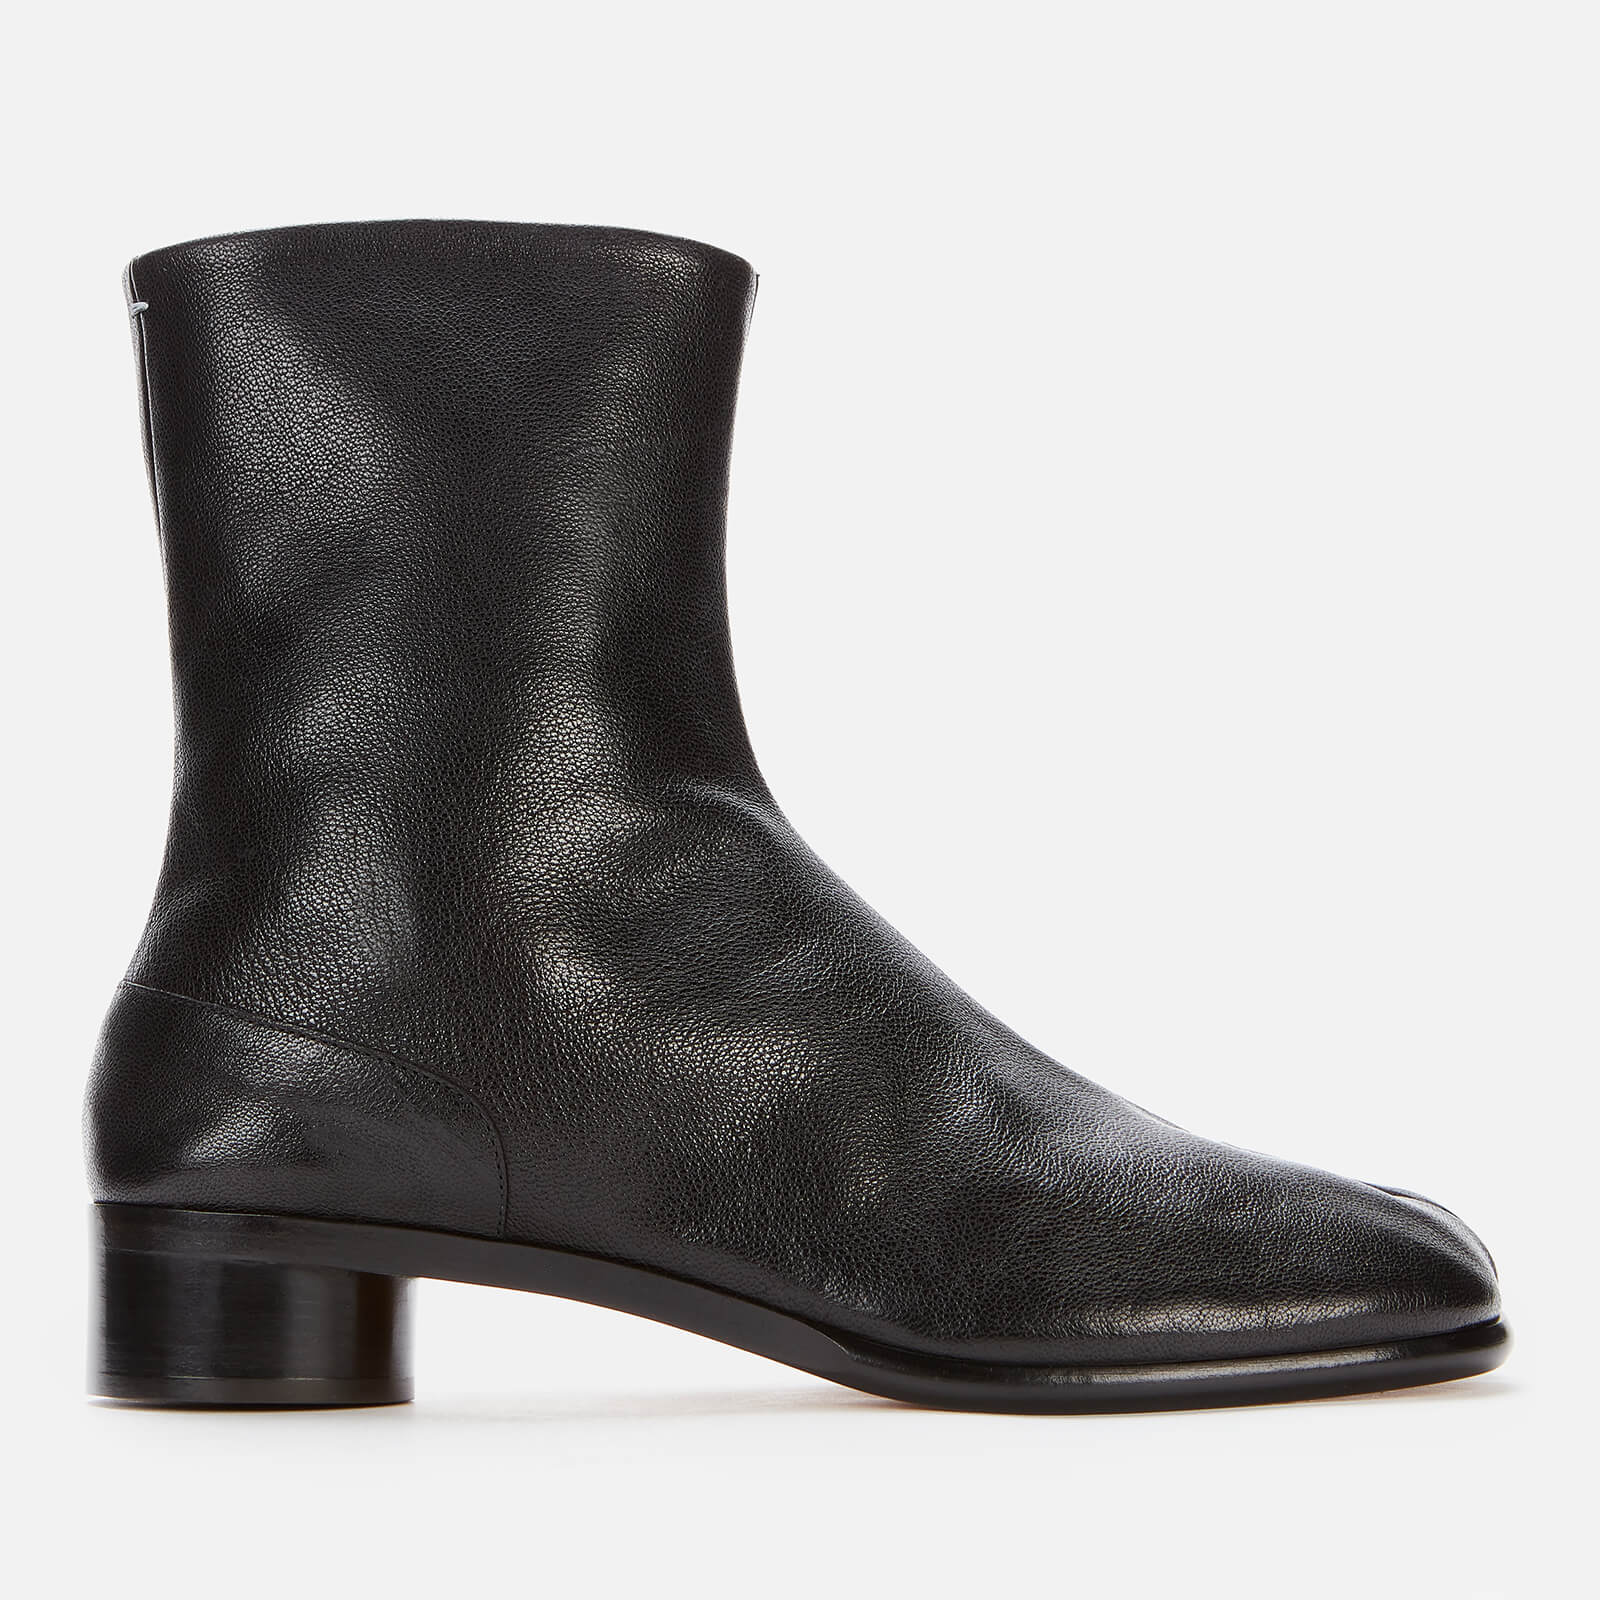 Maison Margiela Men's Tabi Leather Ankle Boots - Black/Ecru/Black - UK 7